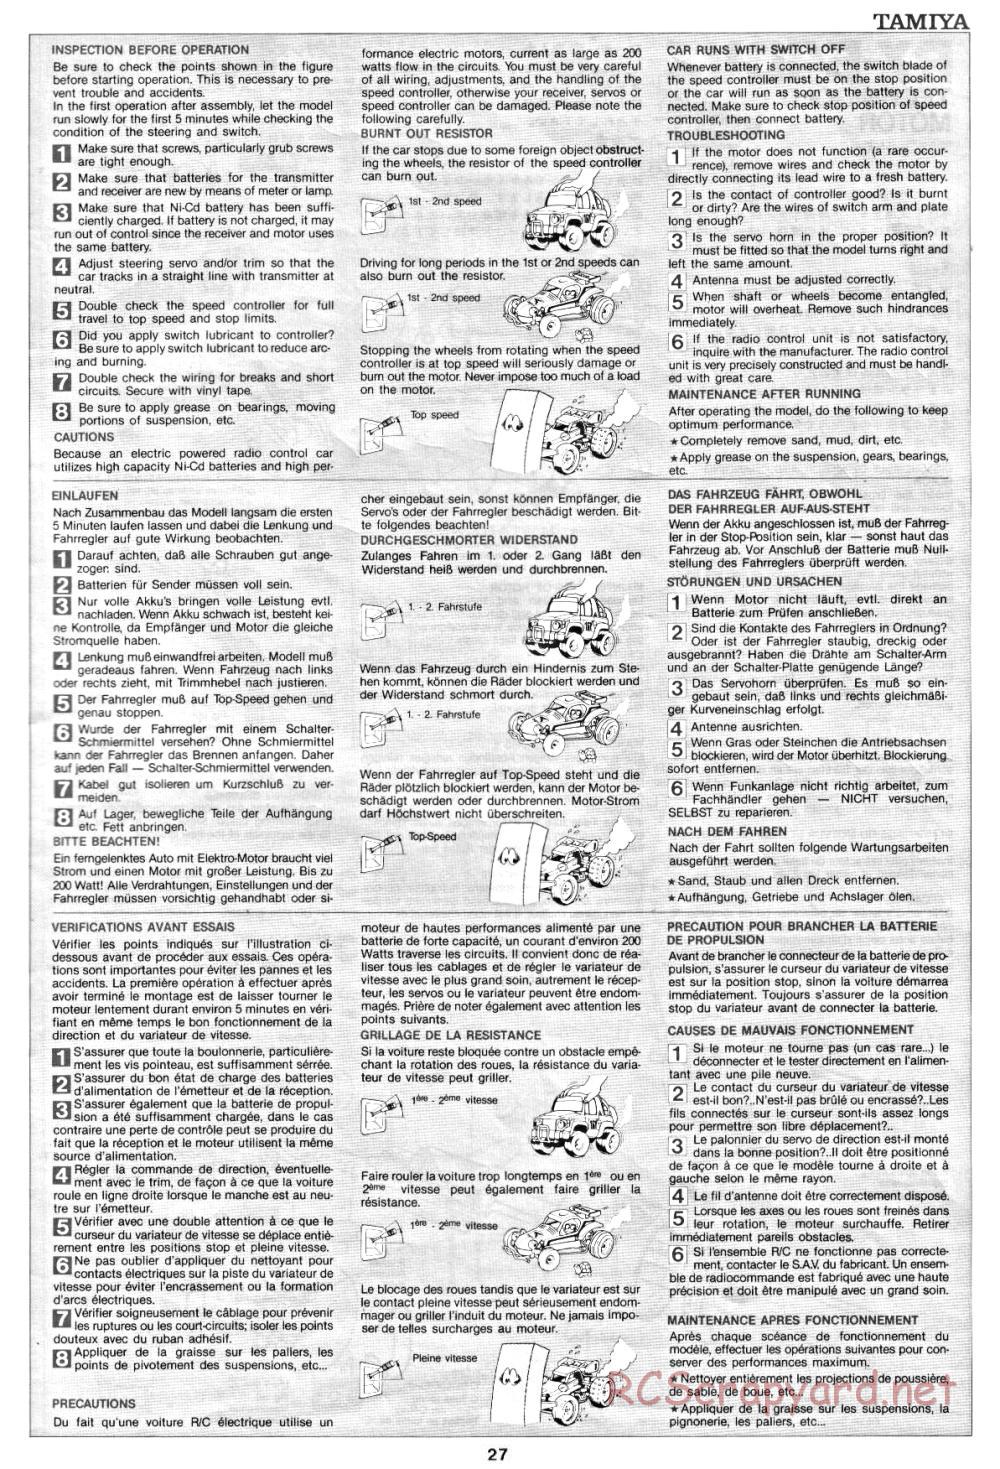 Tamiya - Toyota Celica Gr.B Rally Special - 58064 - Manual - Page 27